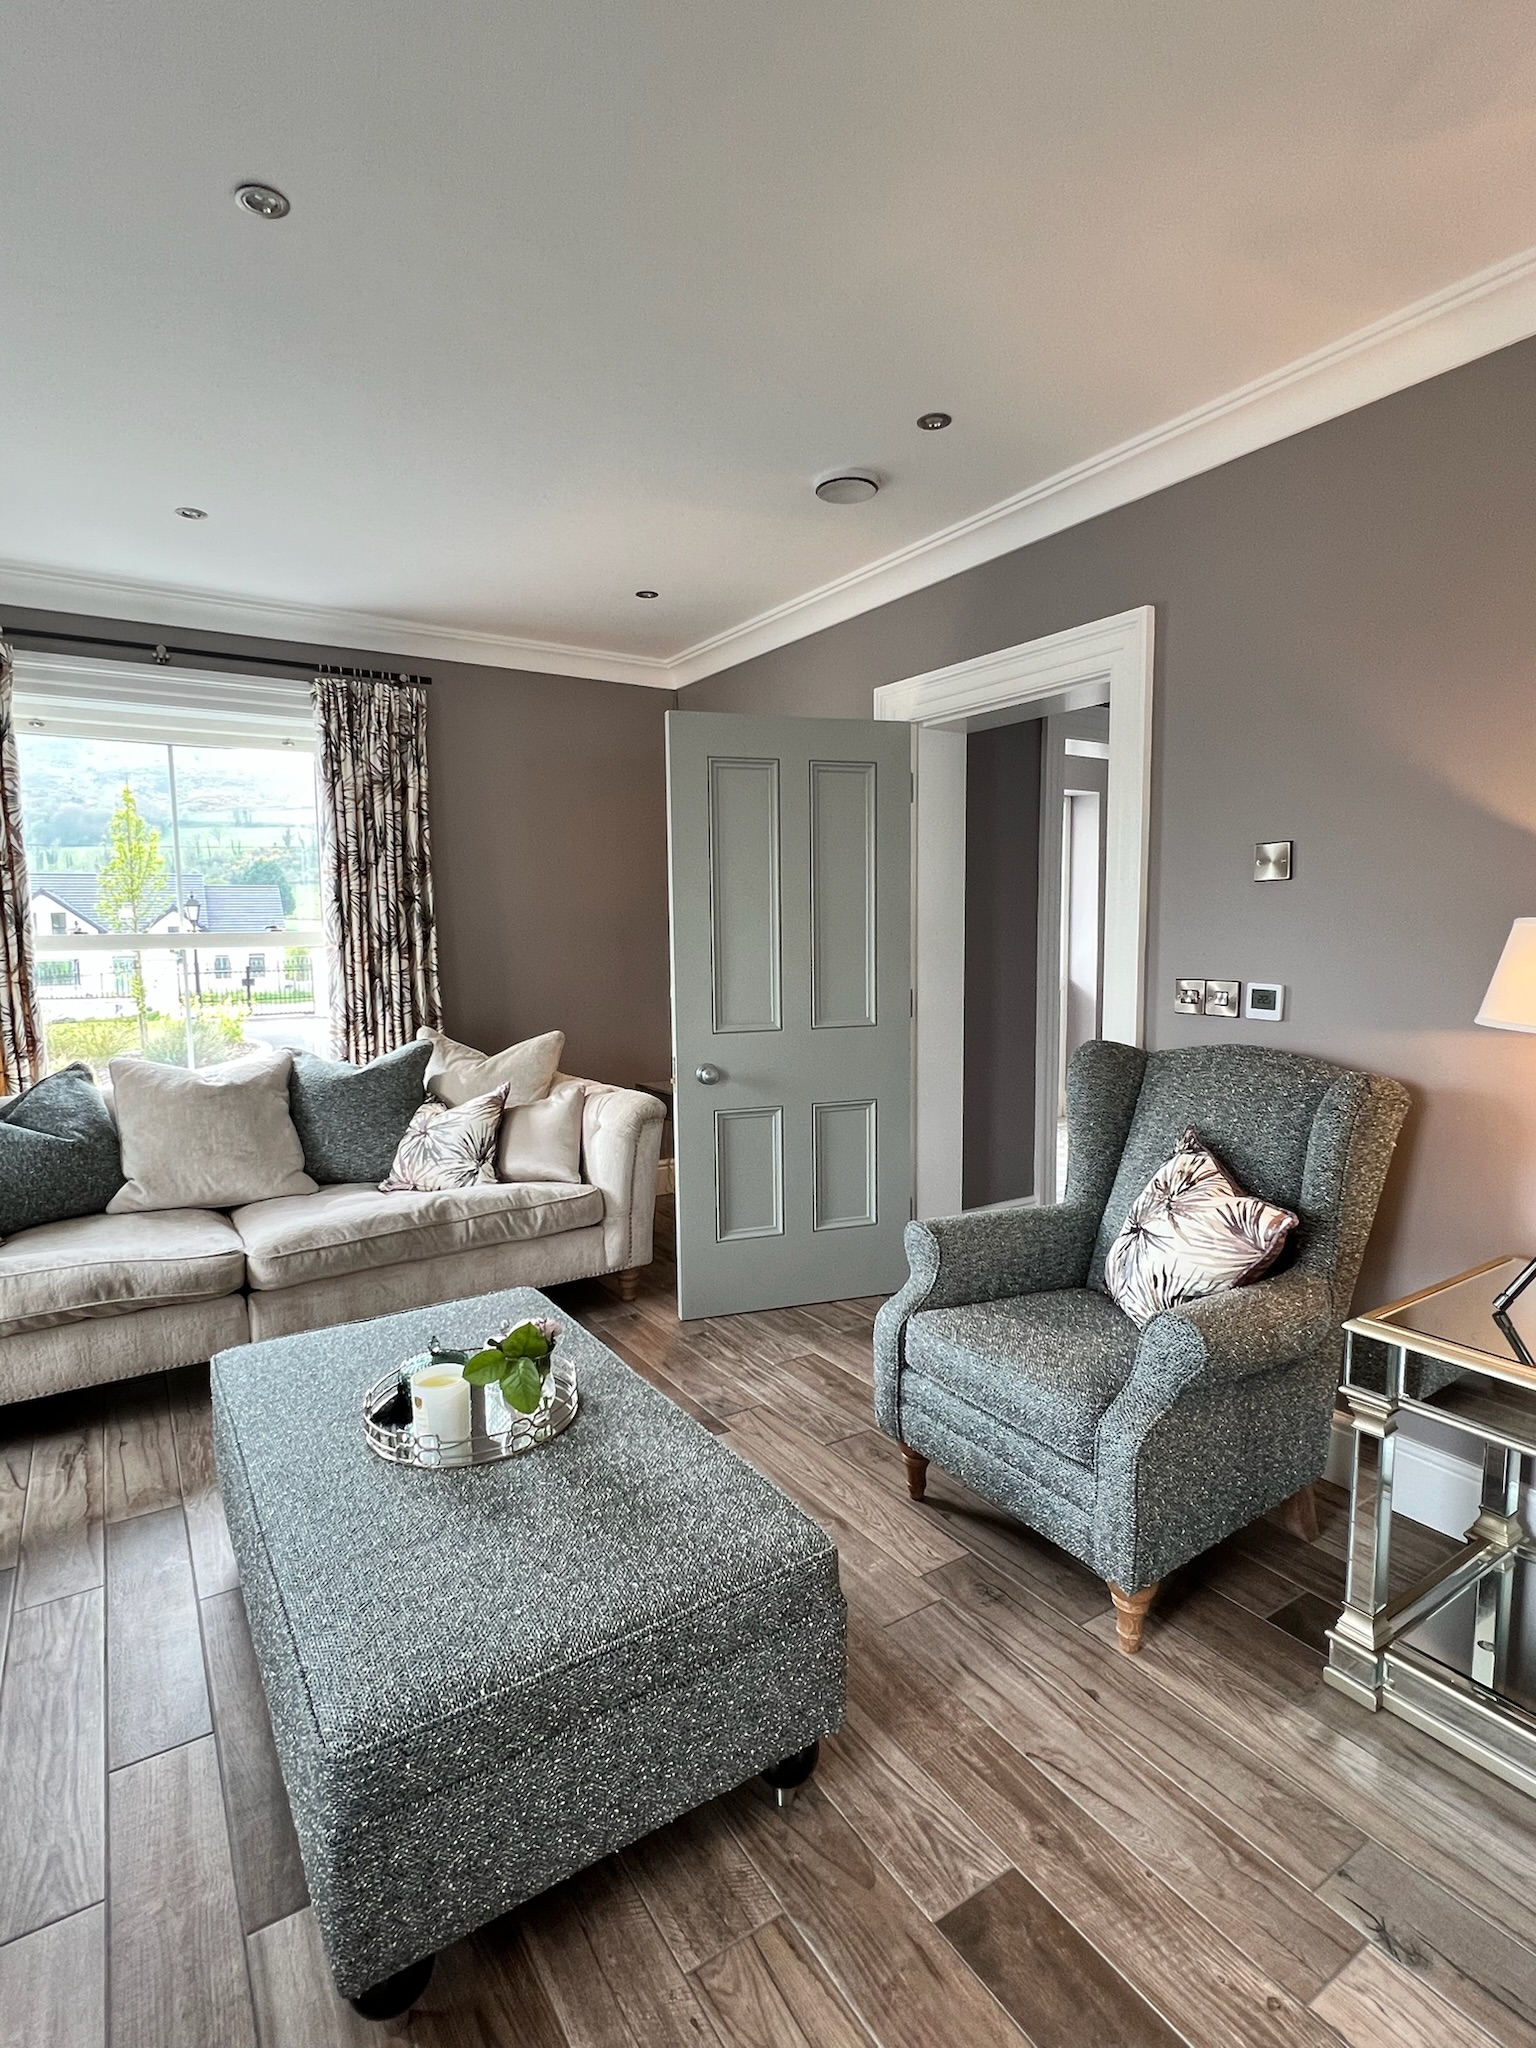 Living Room Design Northern Ireland